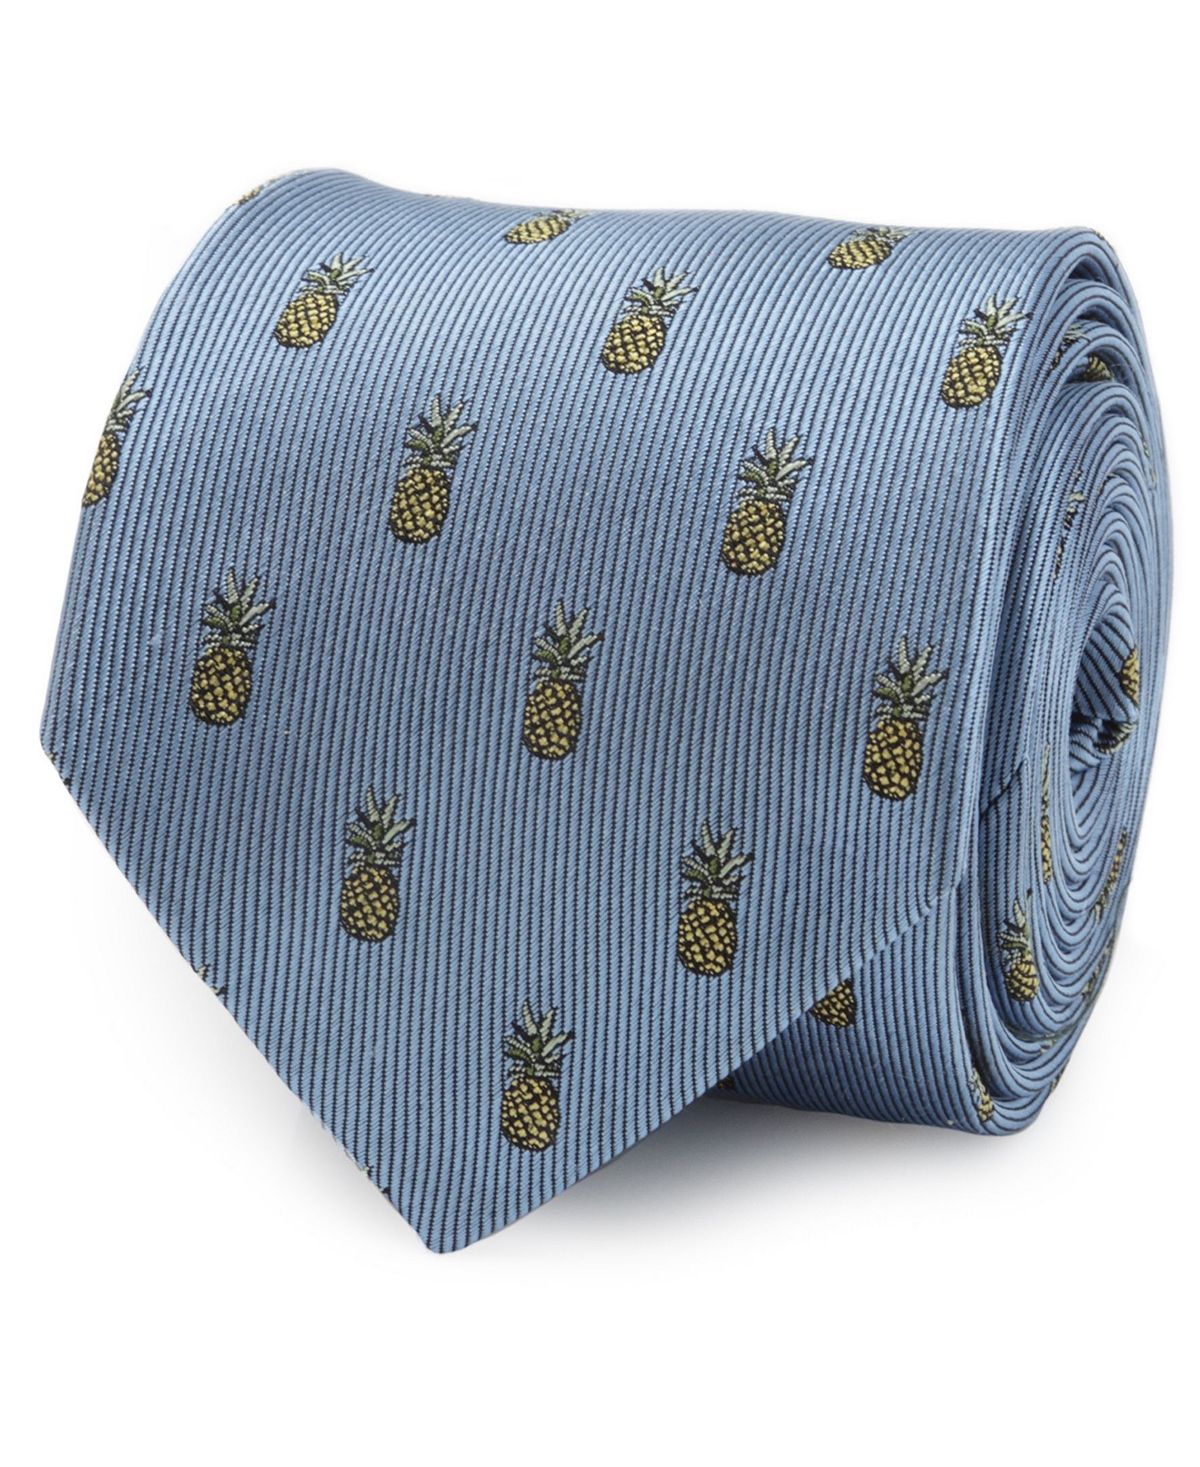 Мужской галстук с ананасом Cufflinks Inc. мужской галстук бабочка come follow me cufflinks inc